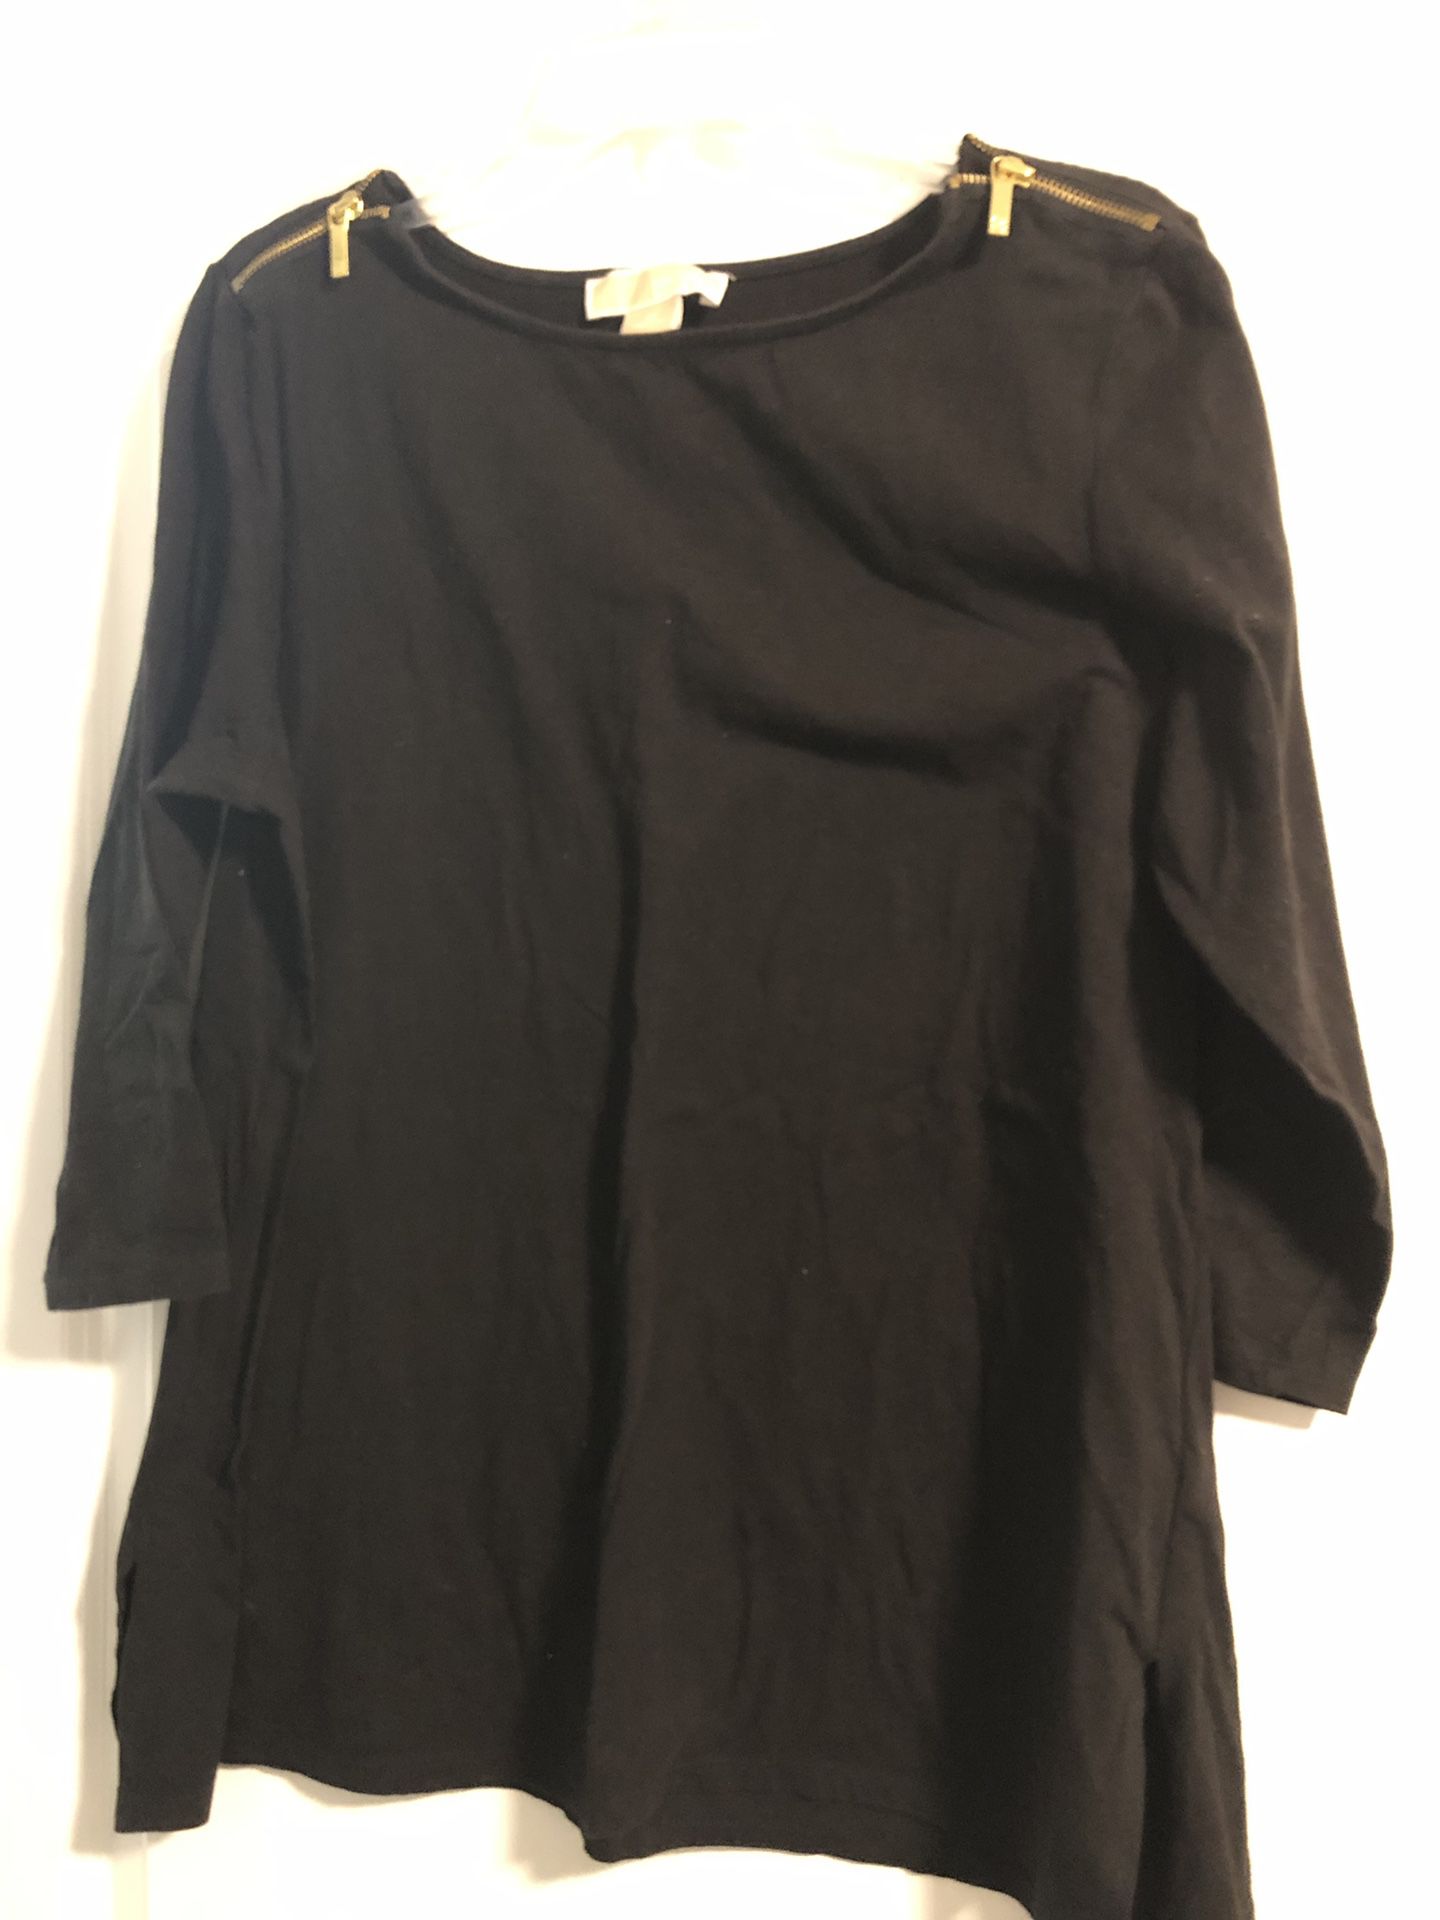 Women’s Michael Kors Shirt: size 1x